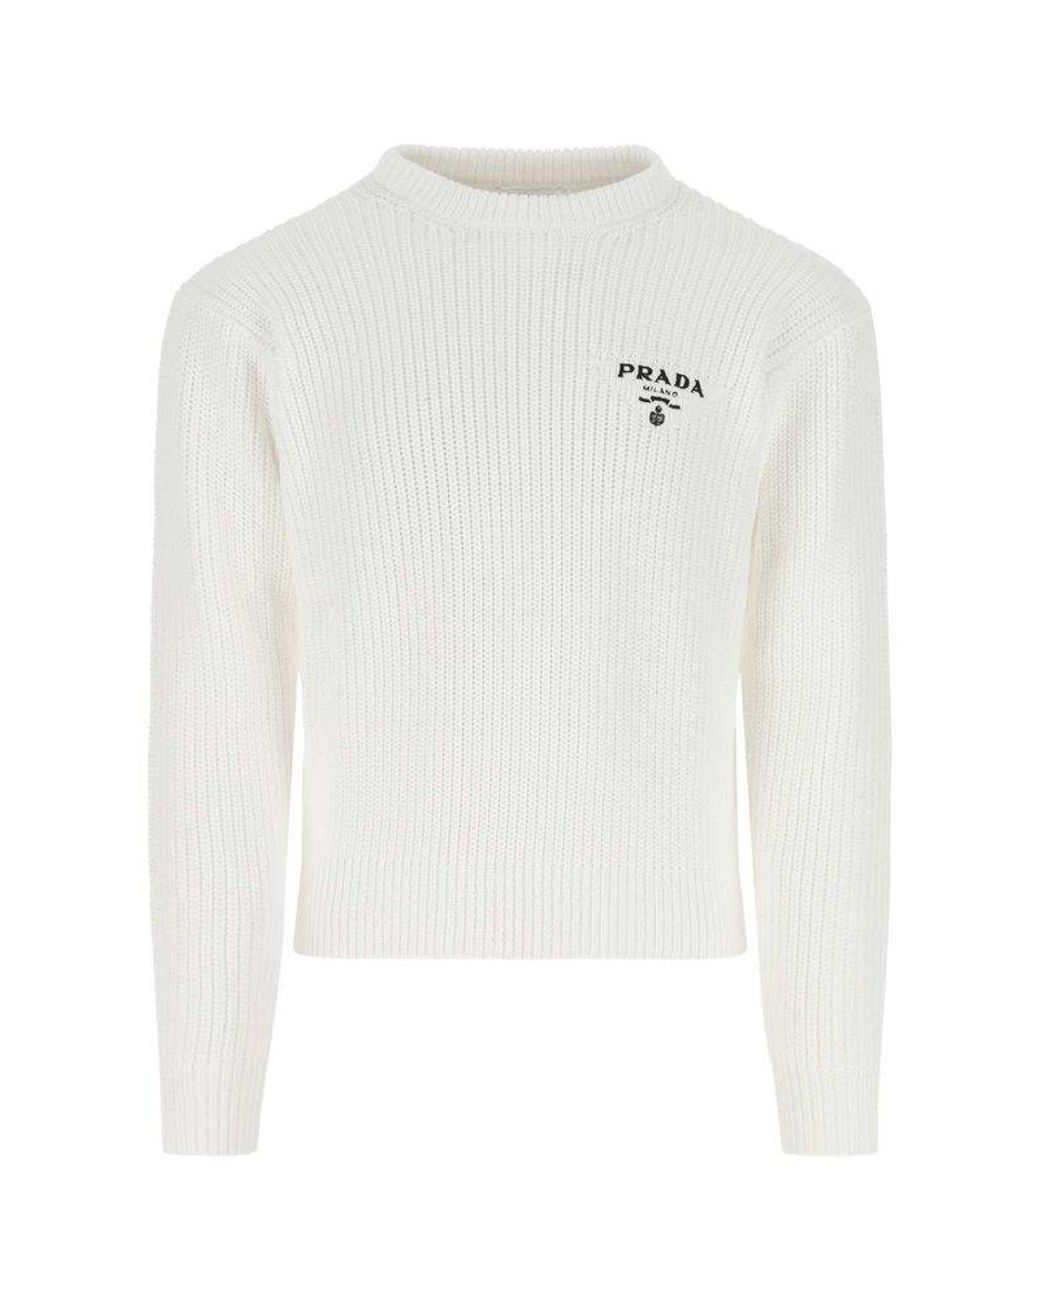 Prada Cotton Sweater in White for Men | Lyst Australia